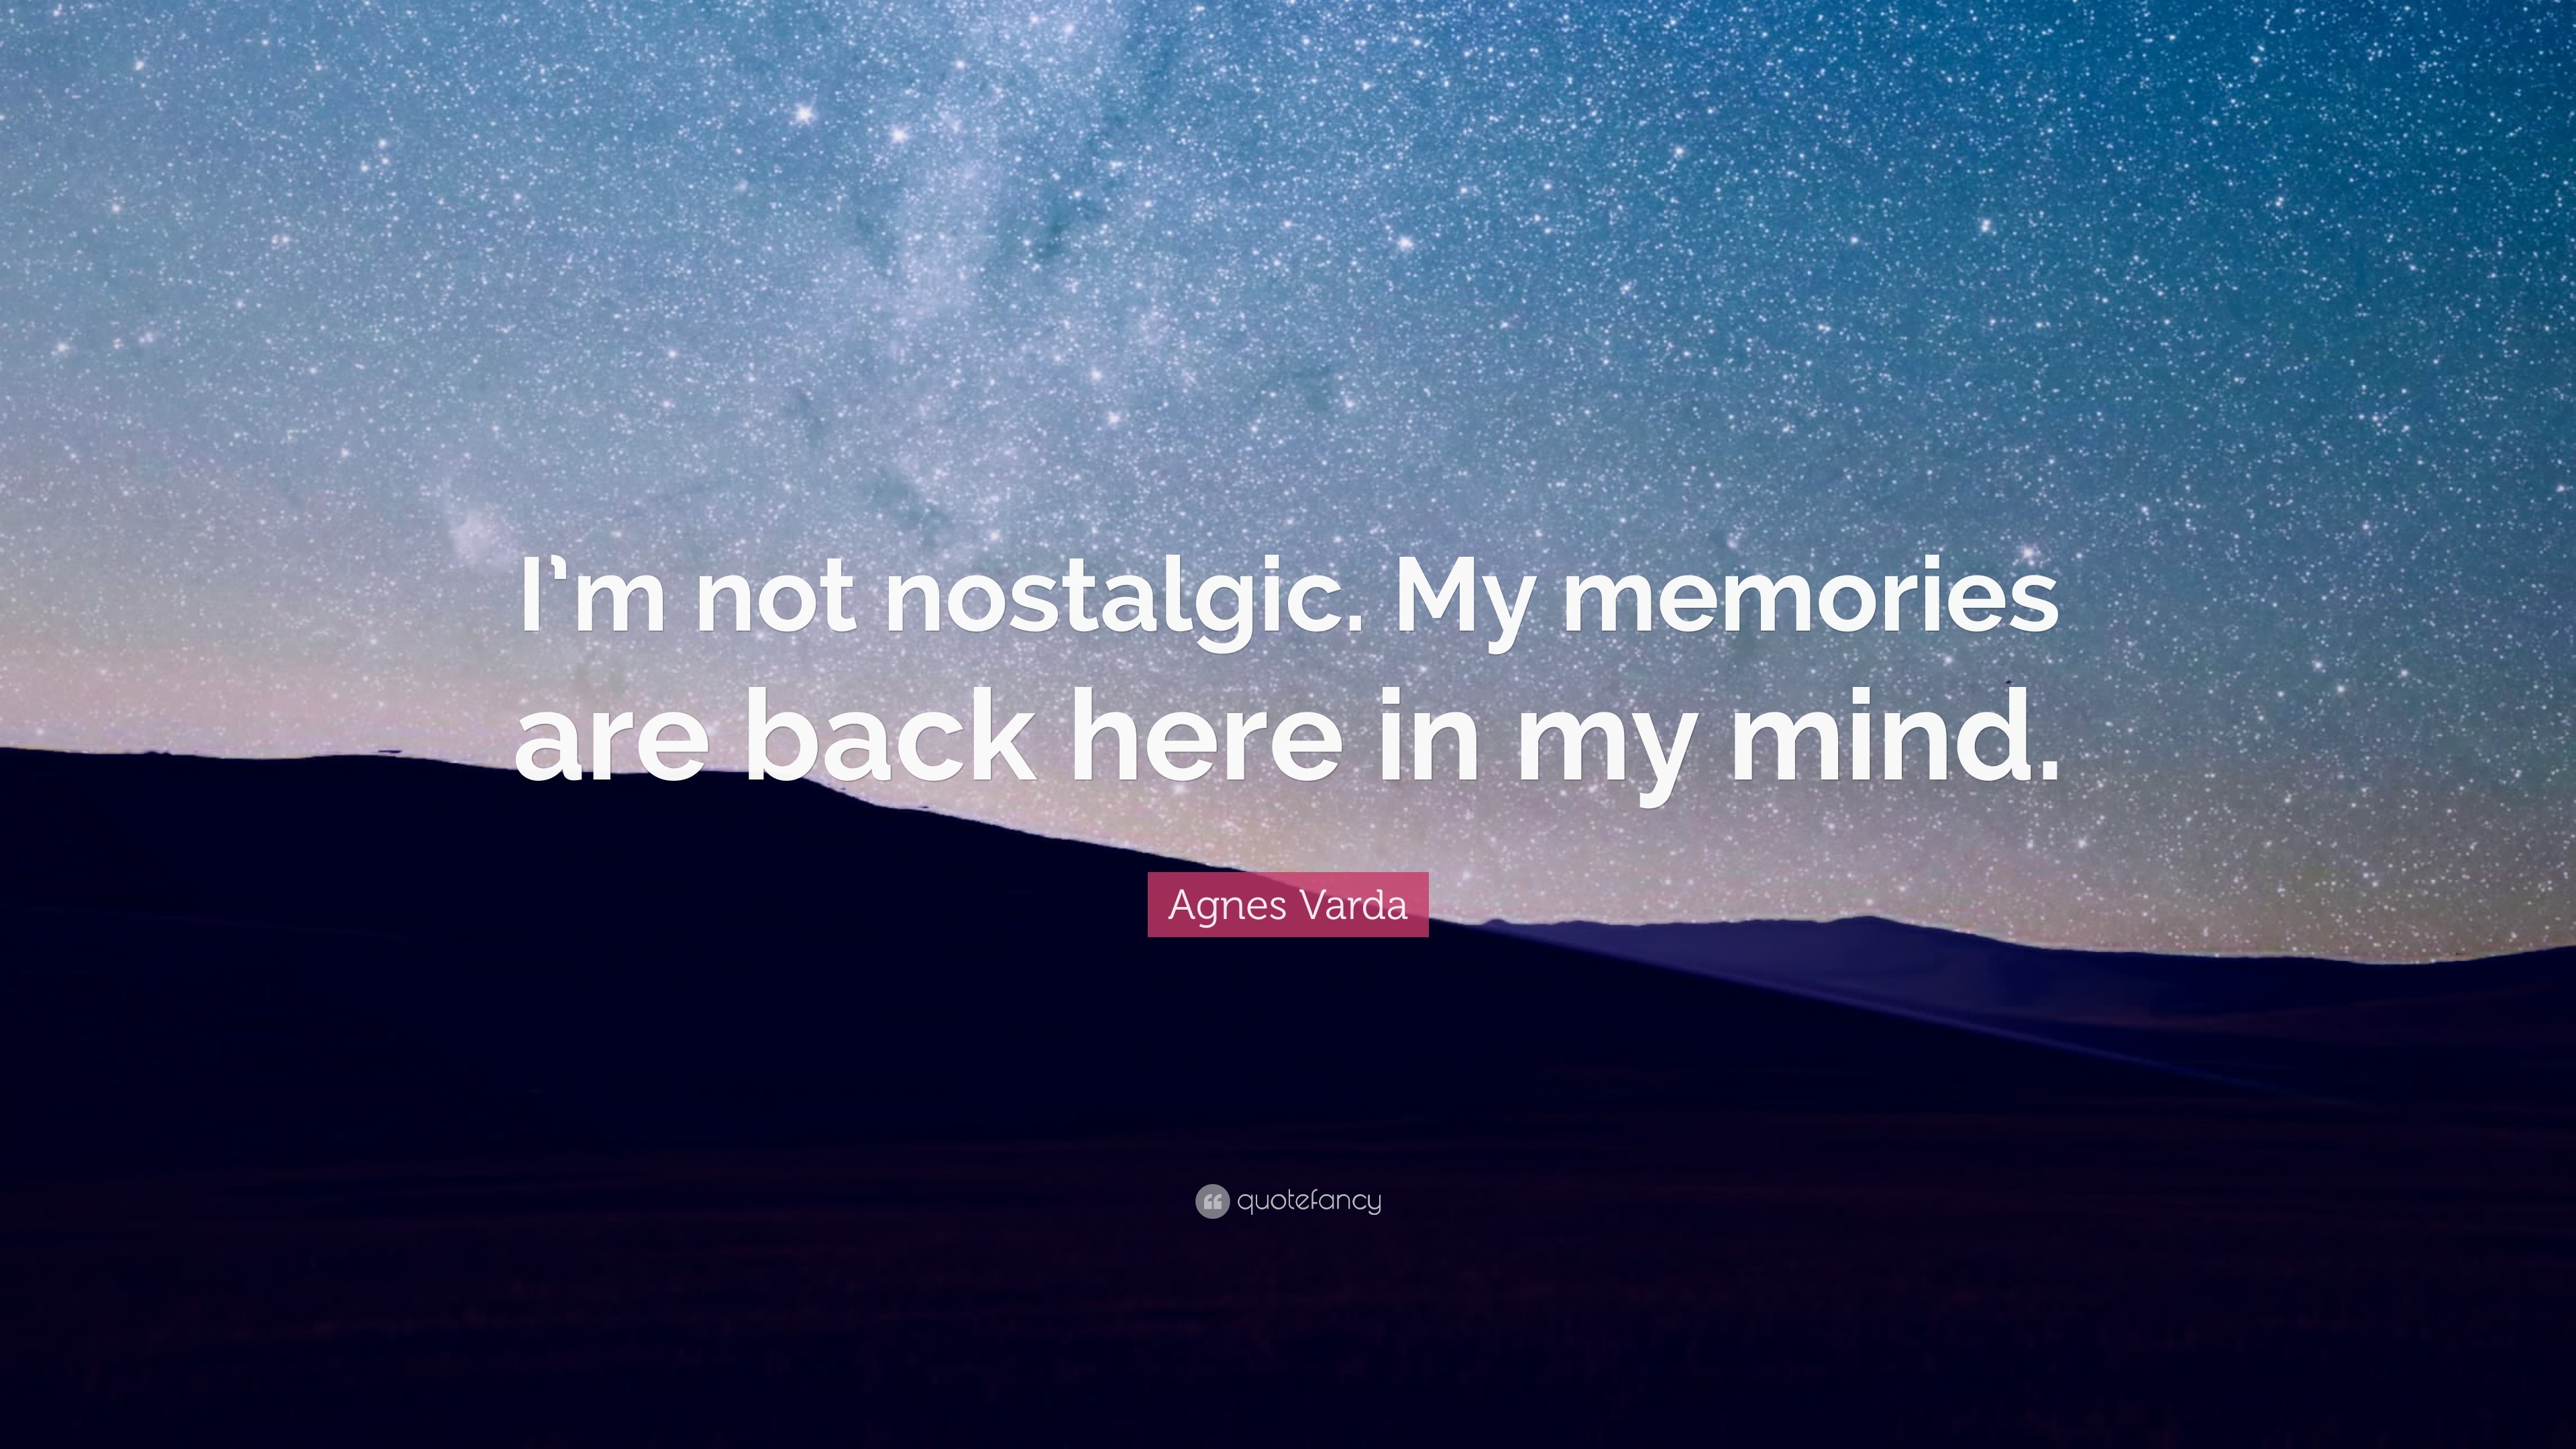 3840x2160 Agnes Varda Quote: “I'm not nostalgic. My memories are back here